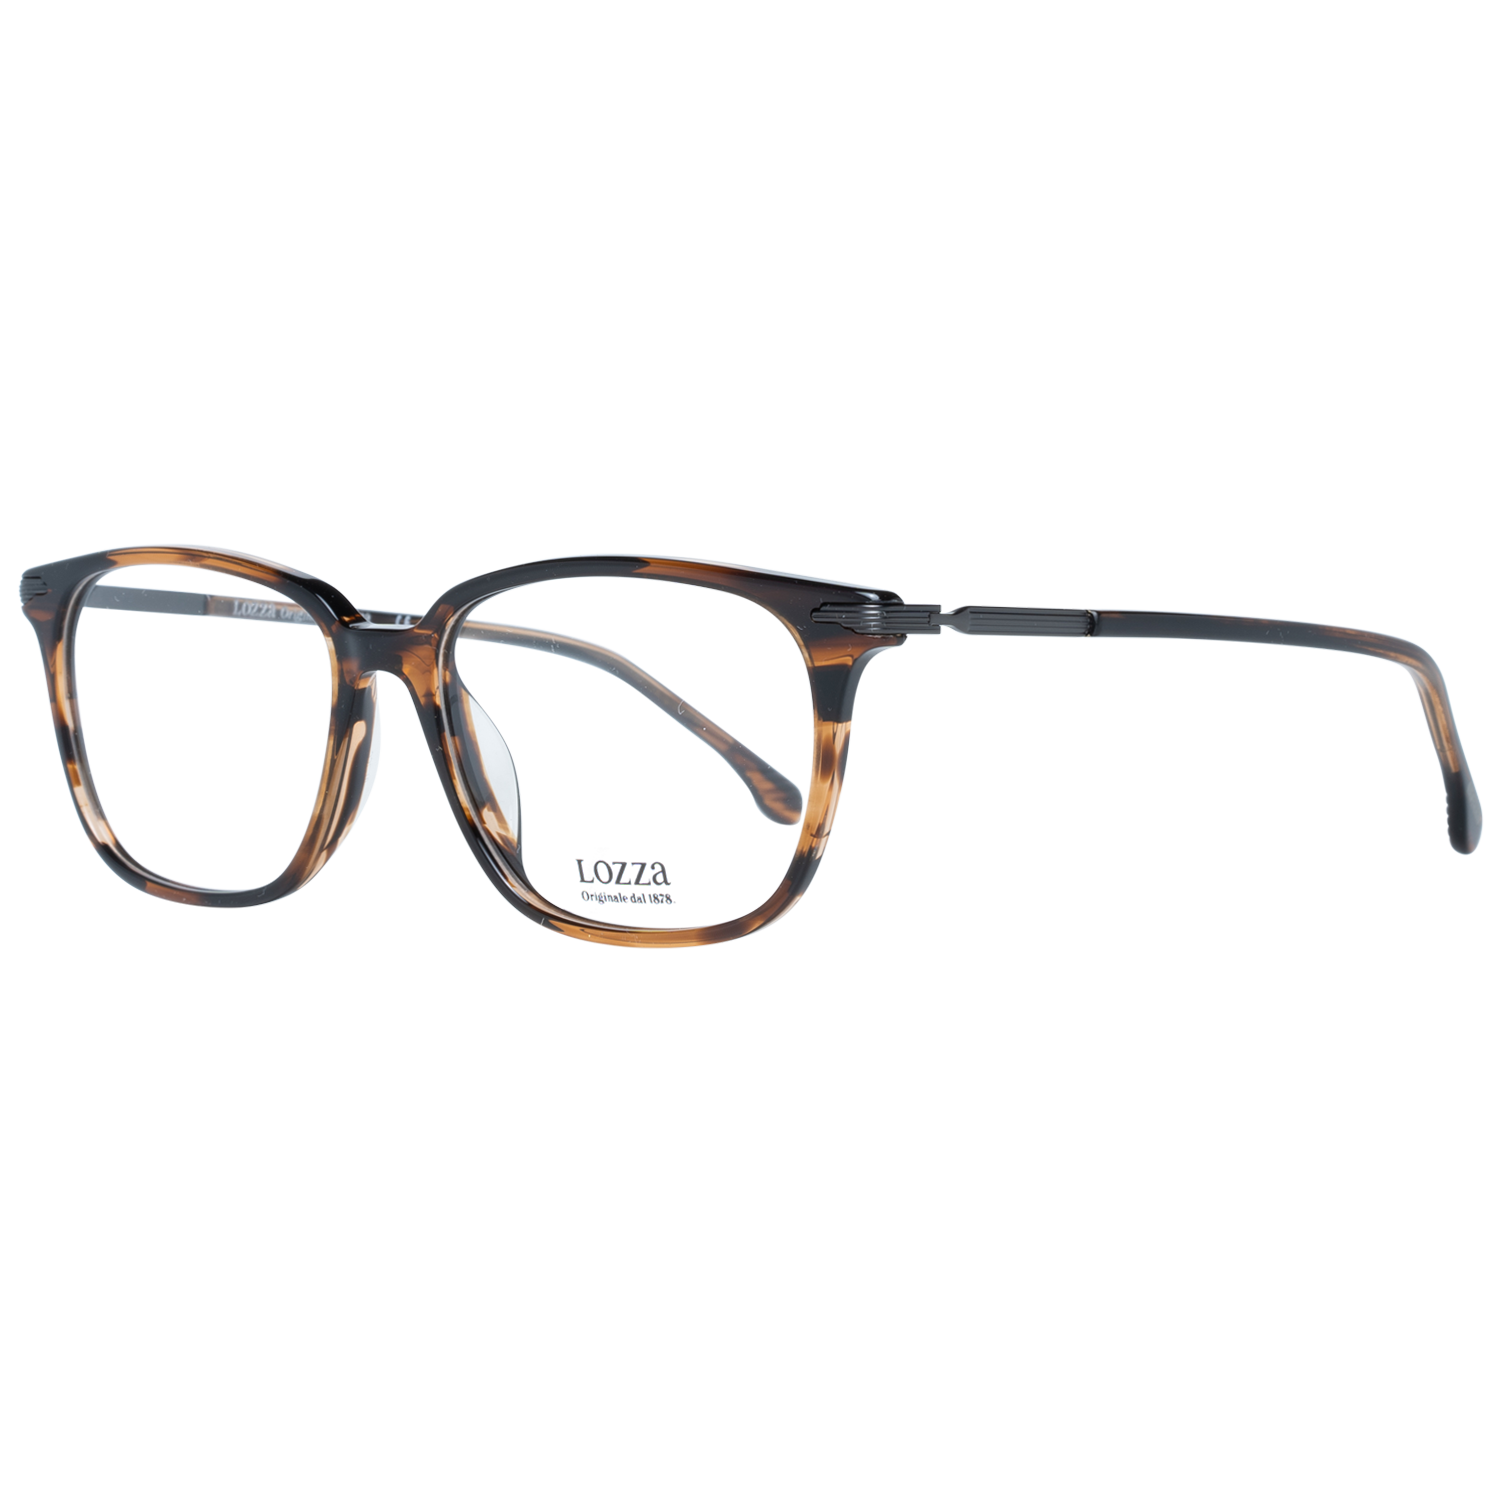 Lozza Frames Lozza Optical Frame VL4089 06YH 53 Eyeglasses Eyewear UK USA Australia 